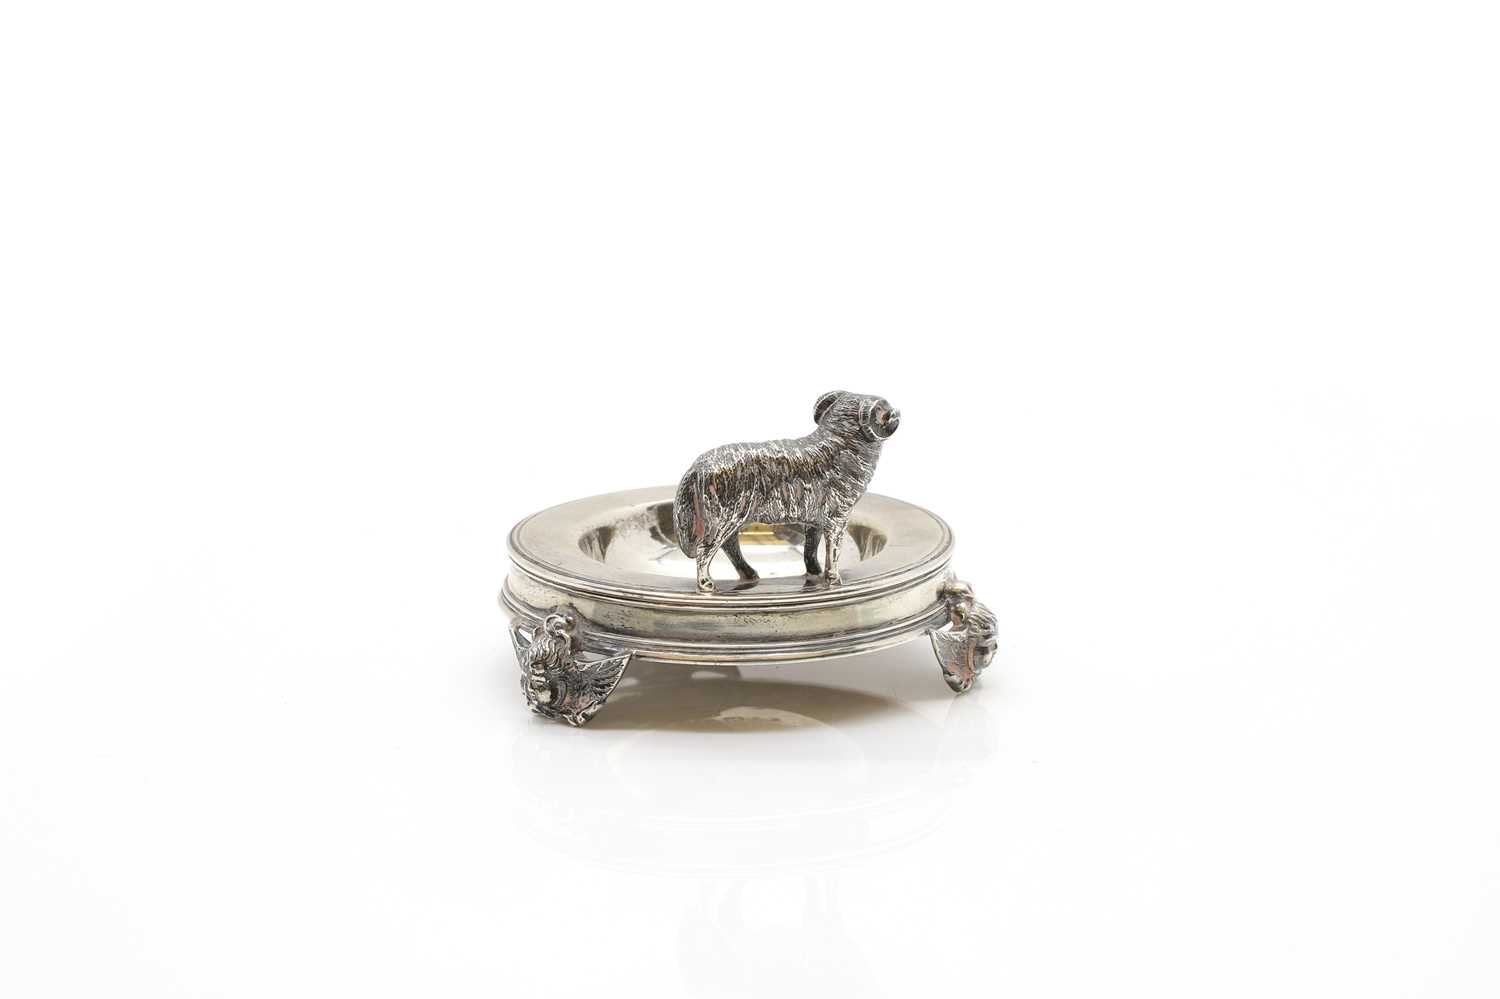 A silver ashtray - Image 2 of 3